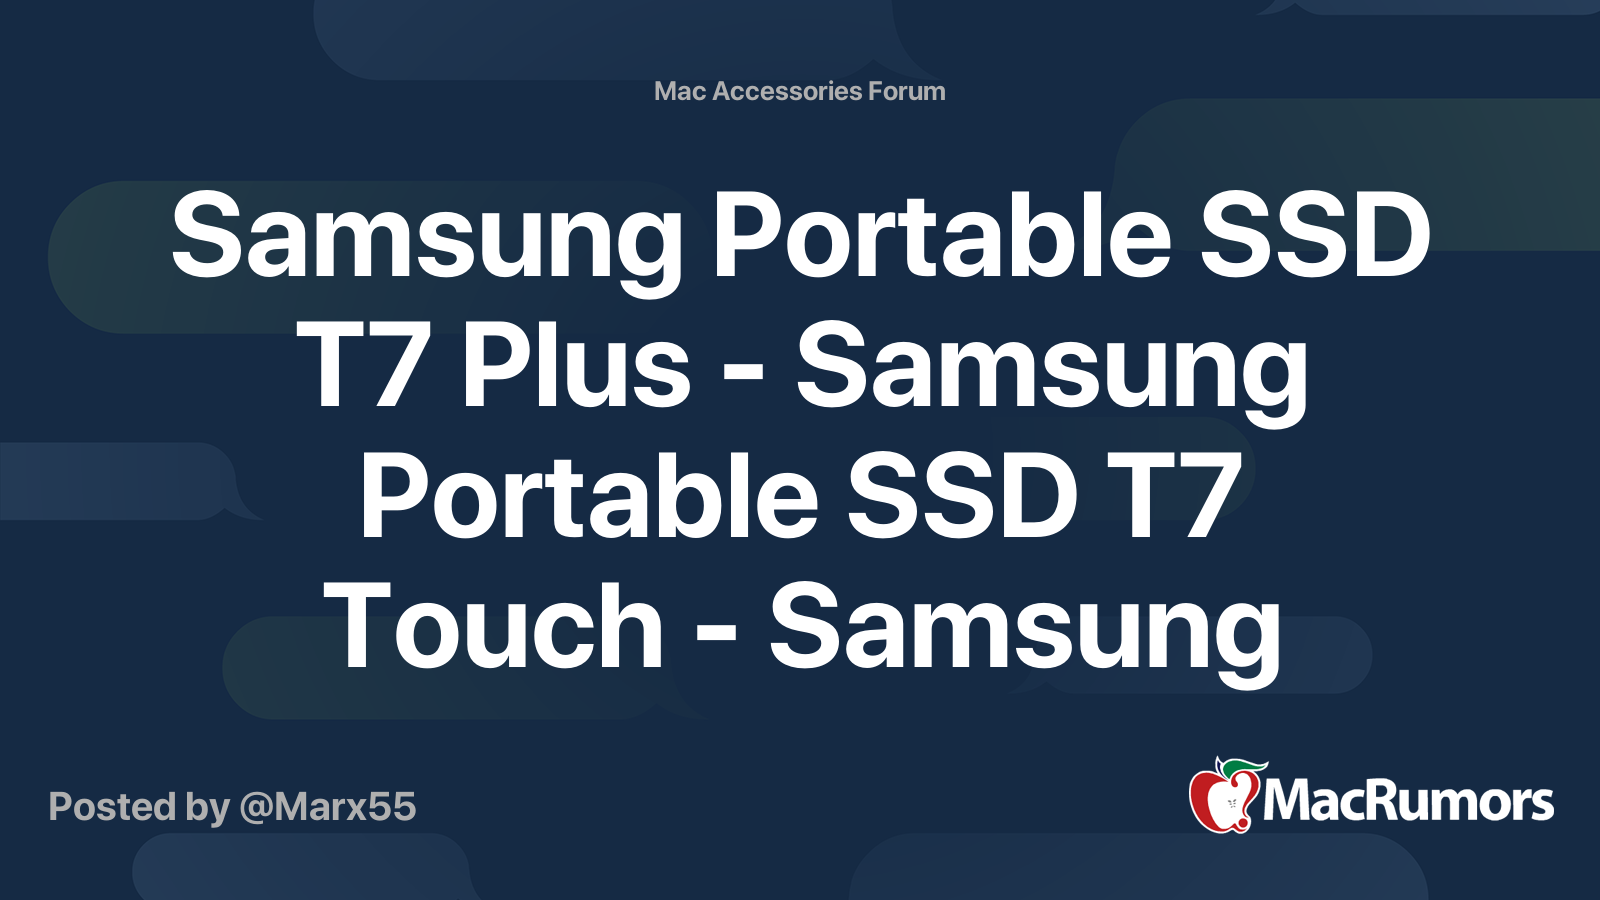 Samsung Portable SSD T7 Plus - Samsung Portable SSD T7 Touch - Samsung  Portable SSD T7 - Samsung Portable SSD T7 Shield